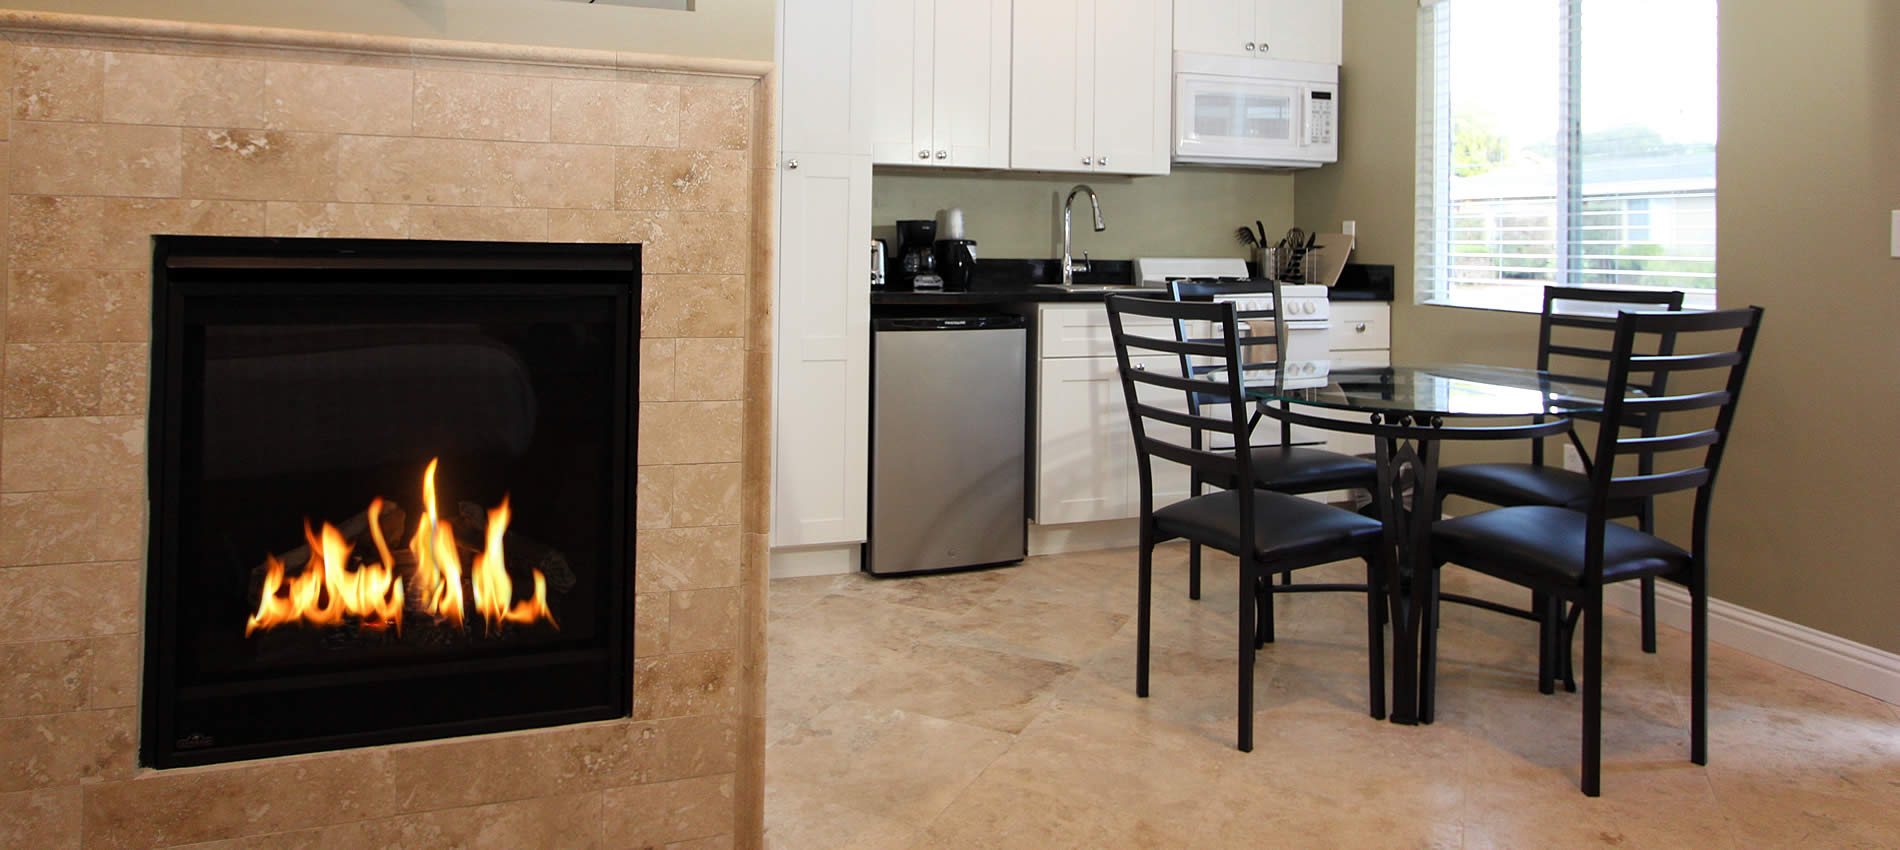 fireplace and kitchen at monterey peninsula hotel